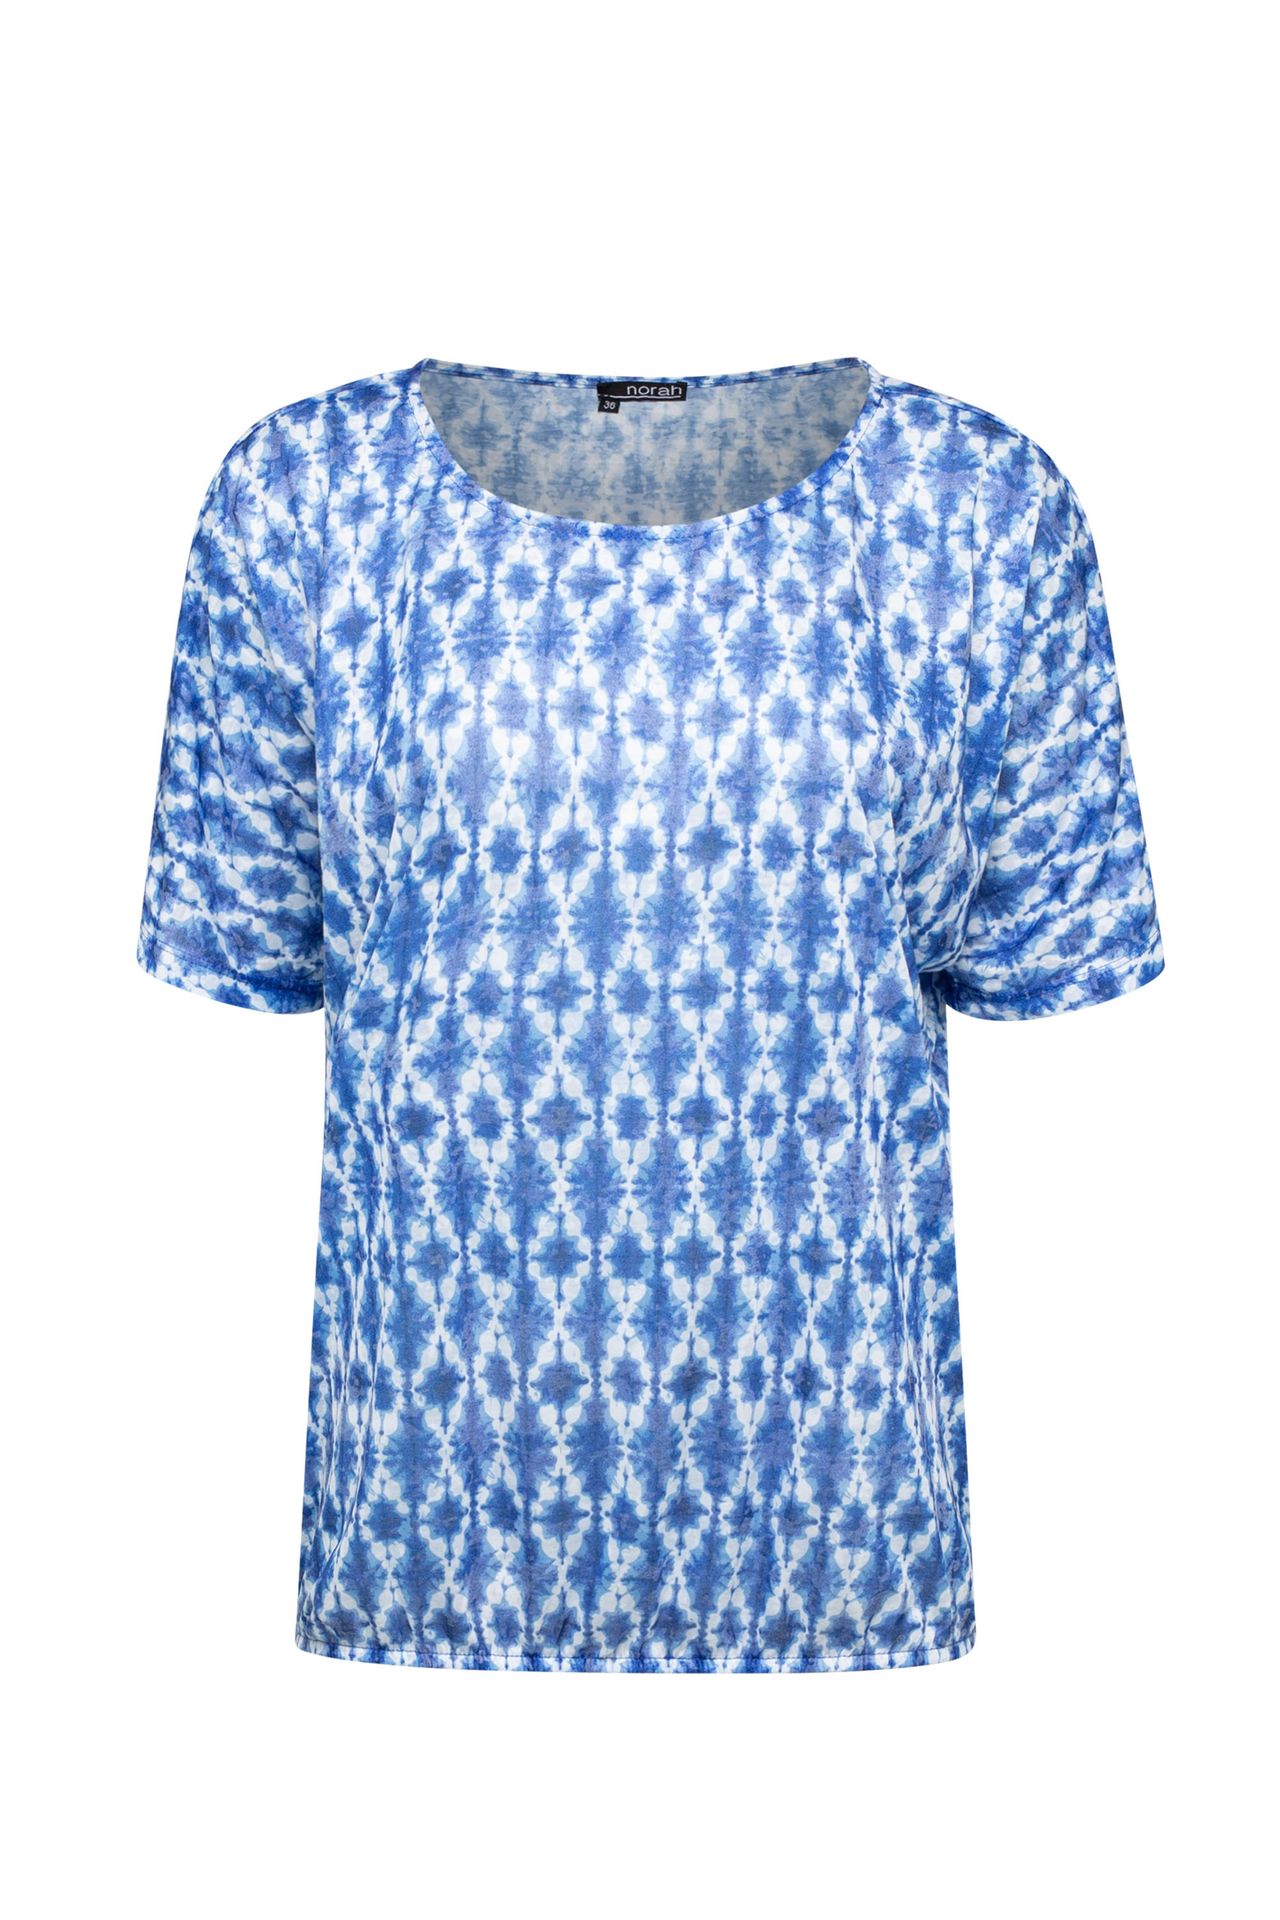  Shirt blauw wit blue/white 212887-431